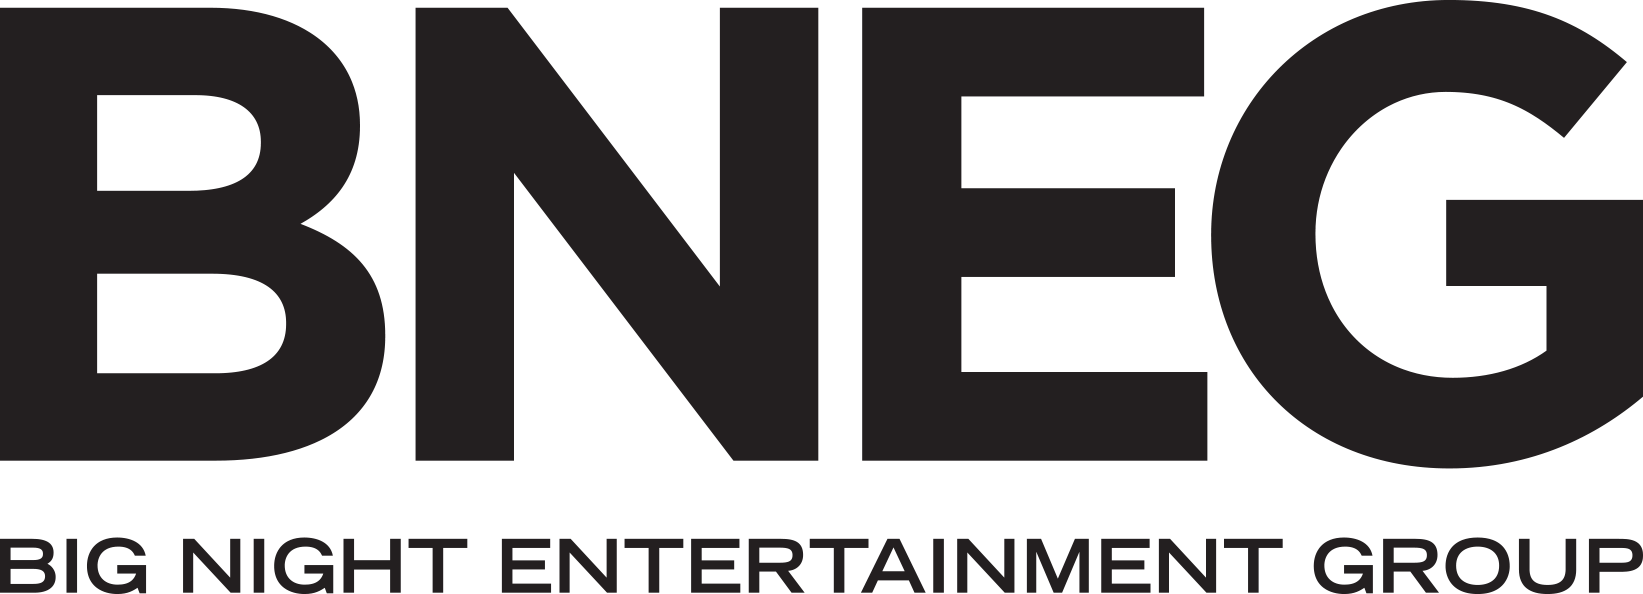 Big Night Entertainment Group logo